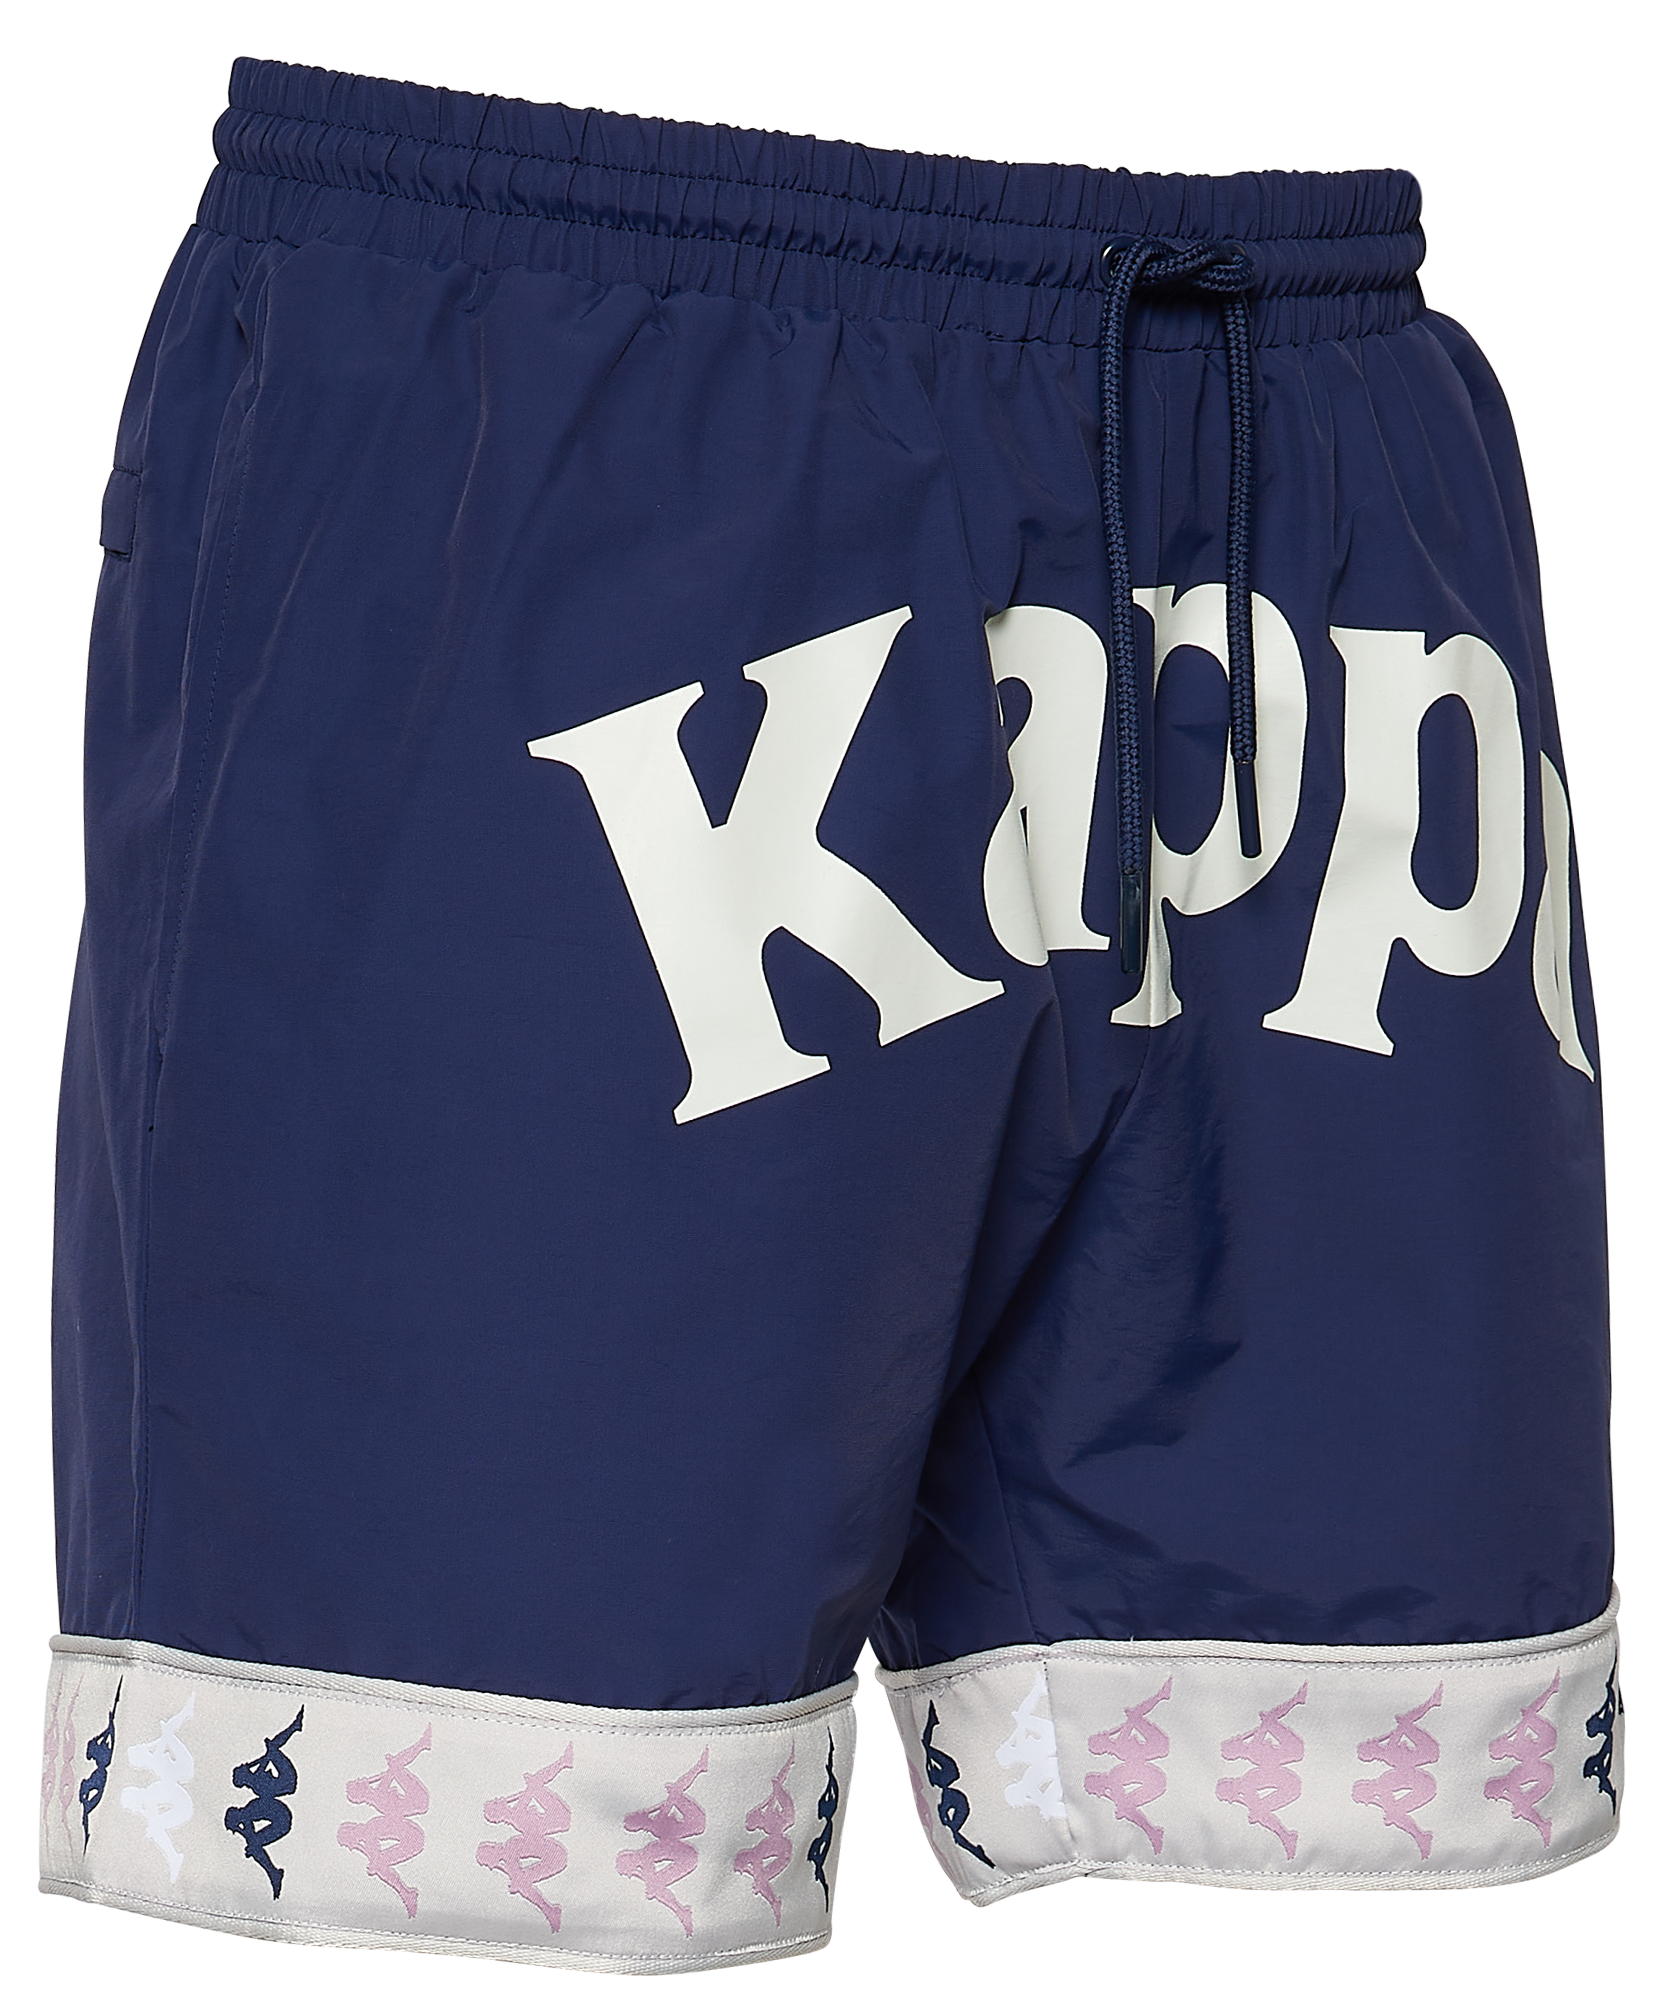 Kappa Banda Calabash 2 Swim Shorts - Men's